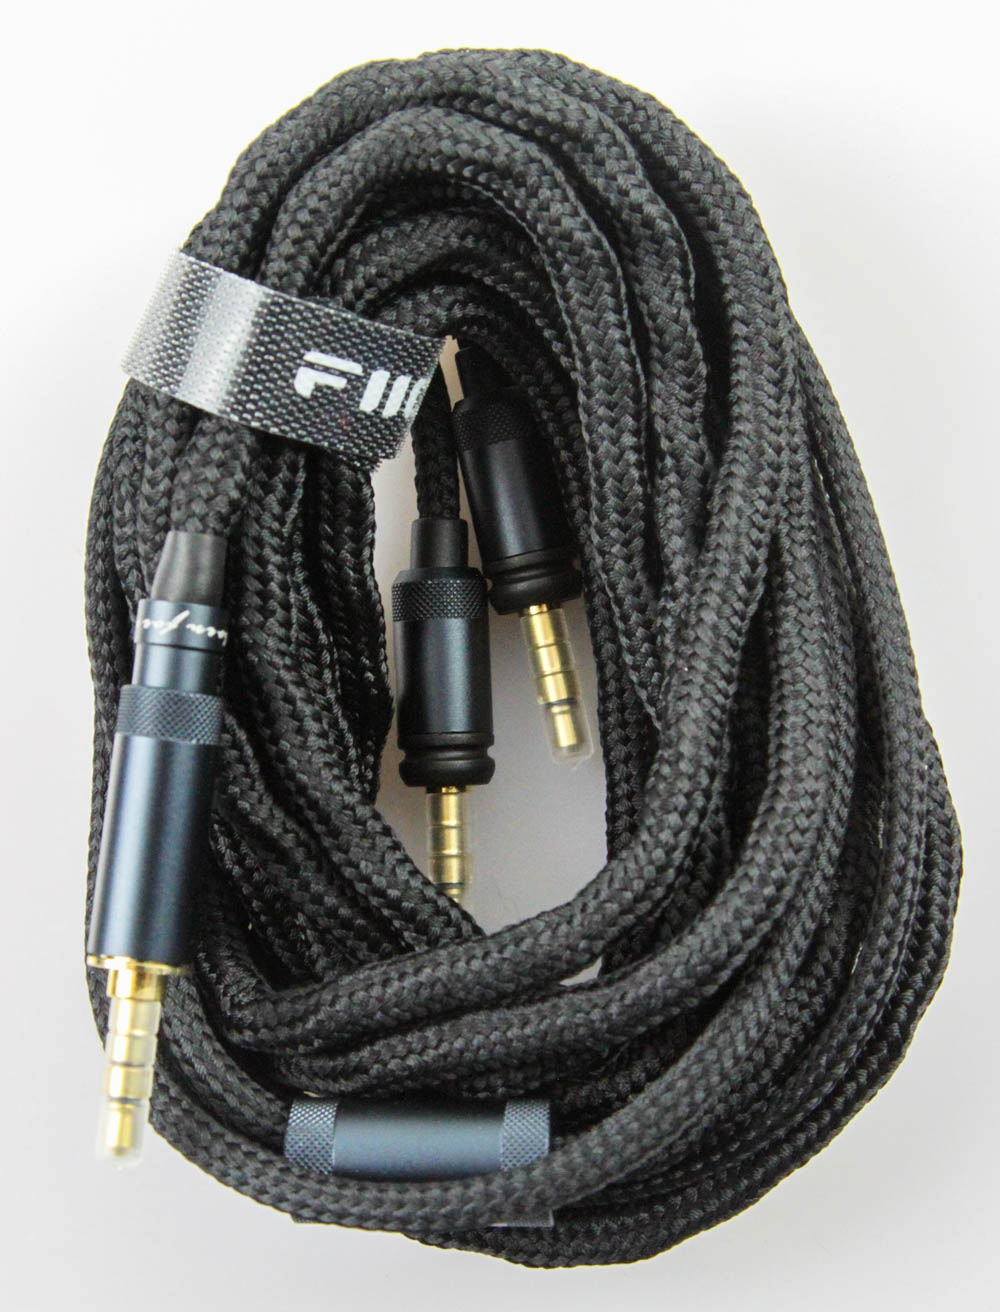 FiiO FT3 Open-Back Dynamic Driver Headphones Review - Closer